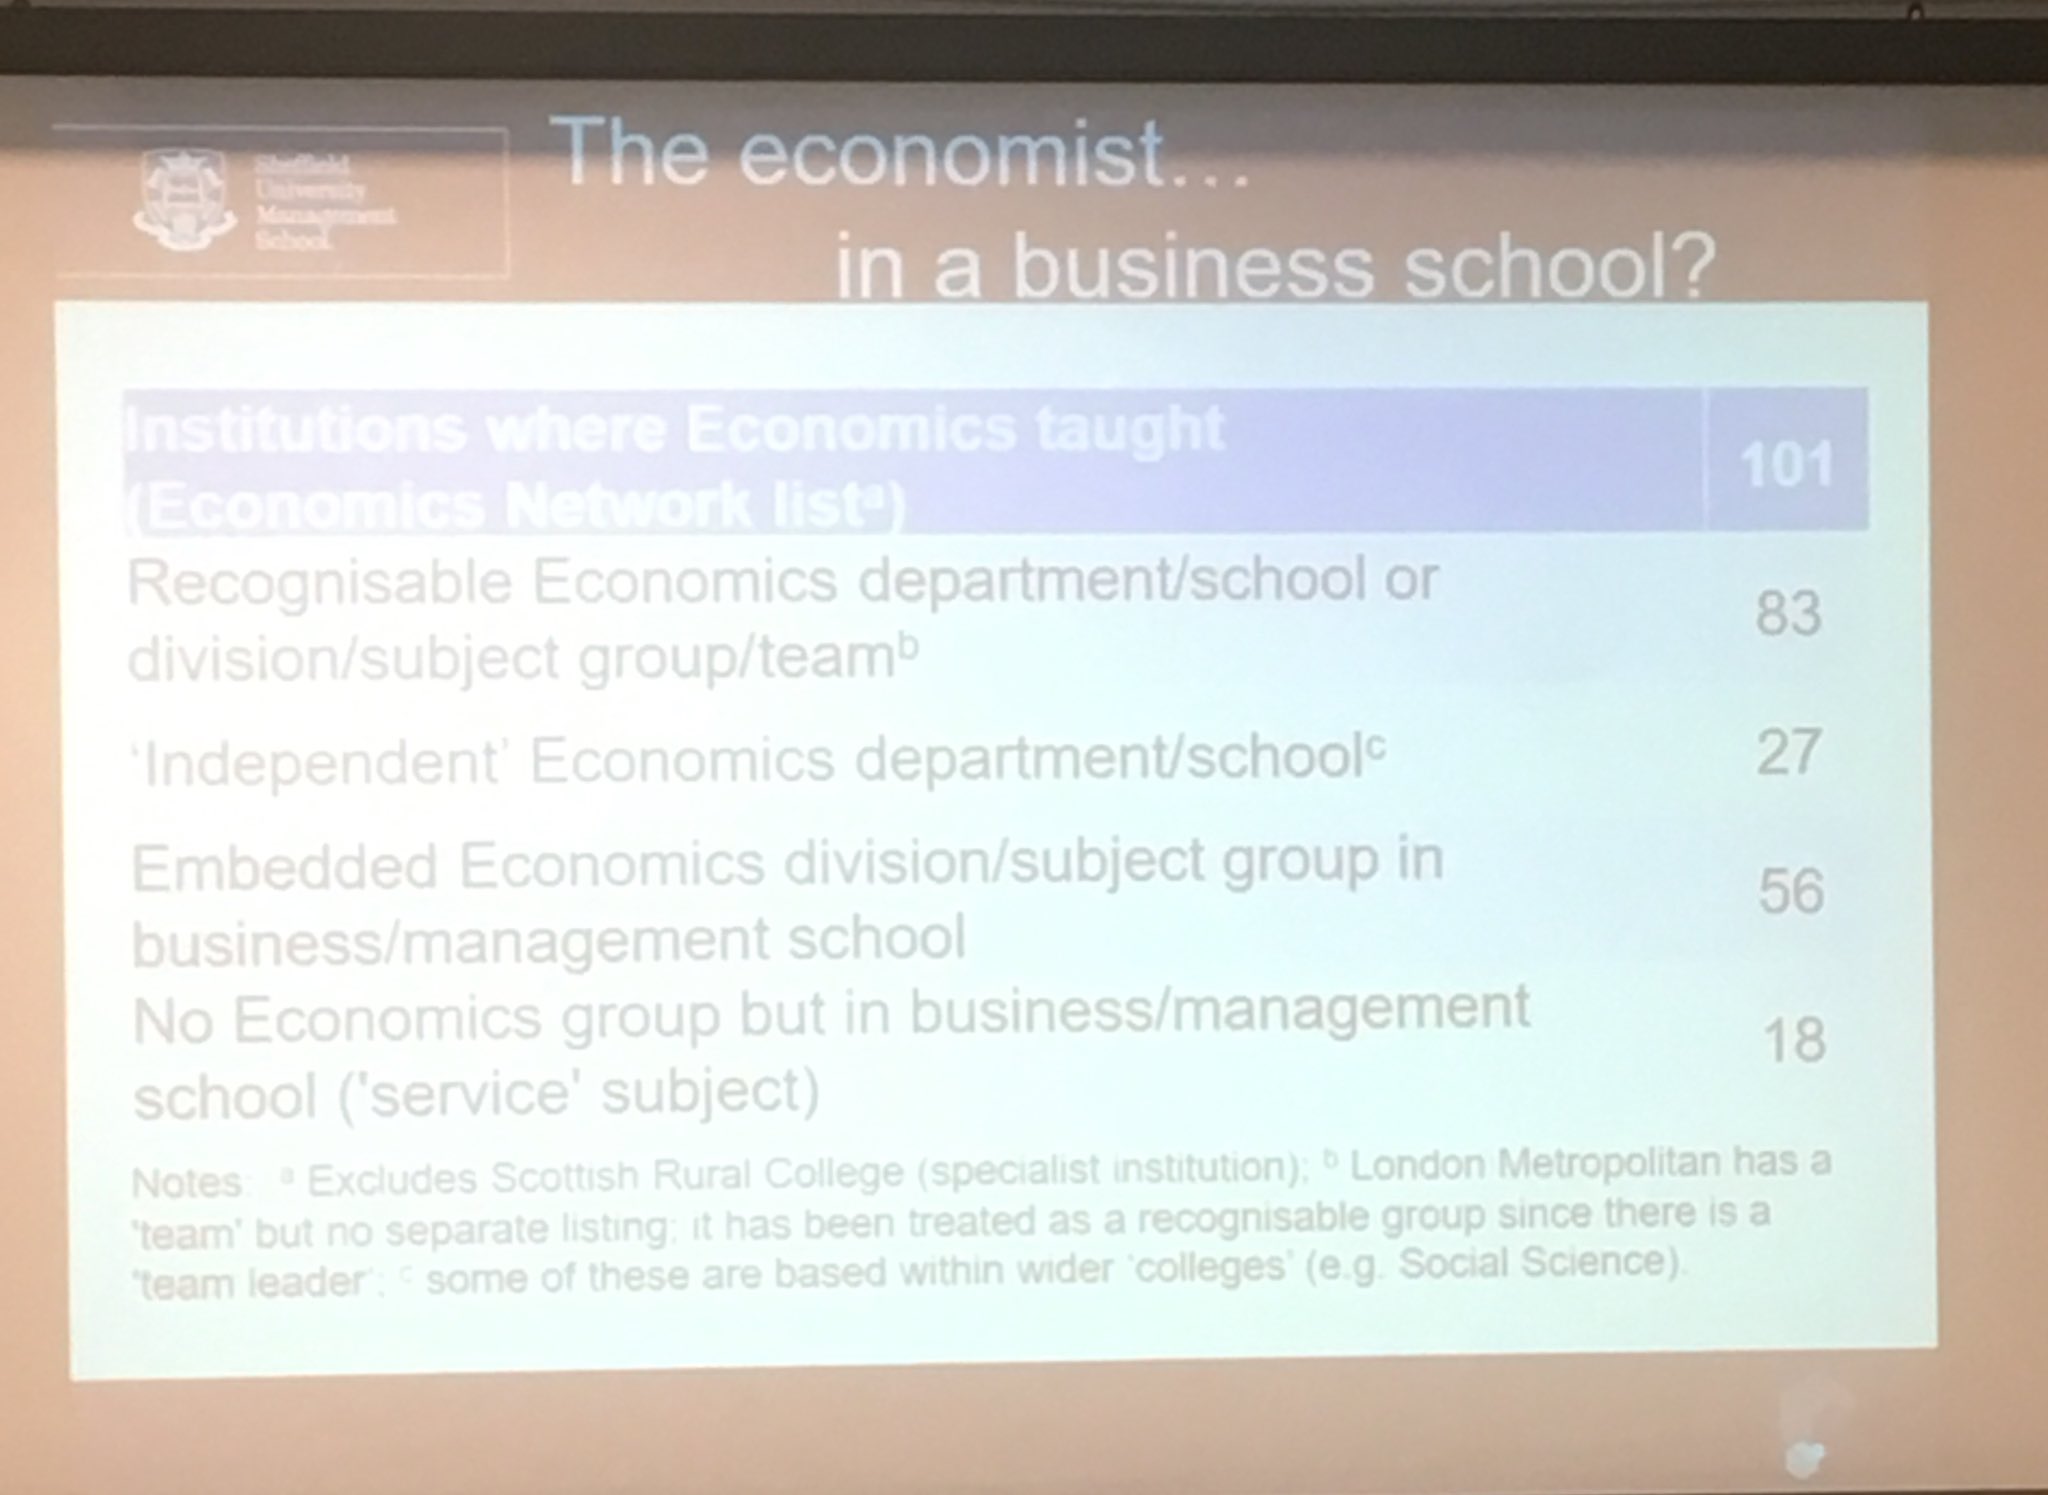 Economists in business schools. #DEE2017 https://t.co/zMJvCbZGfC